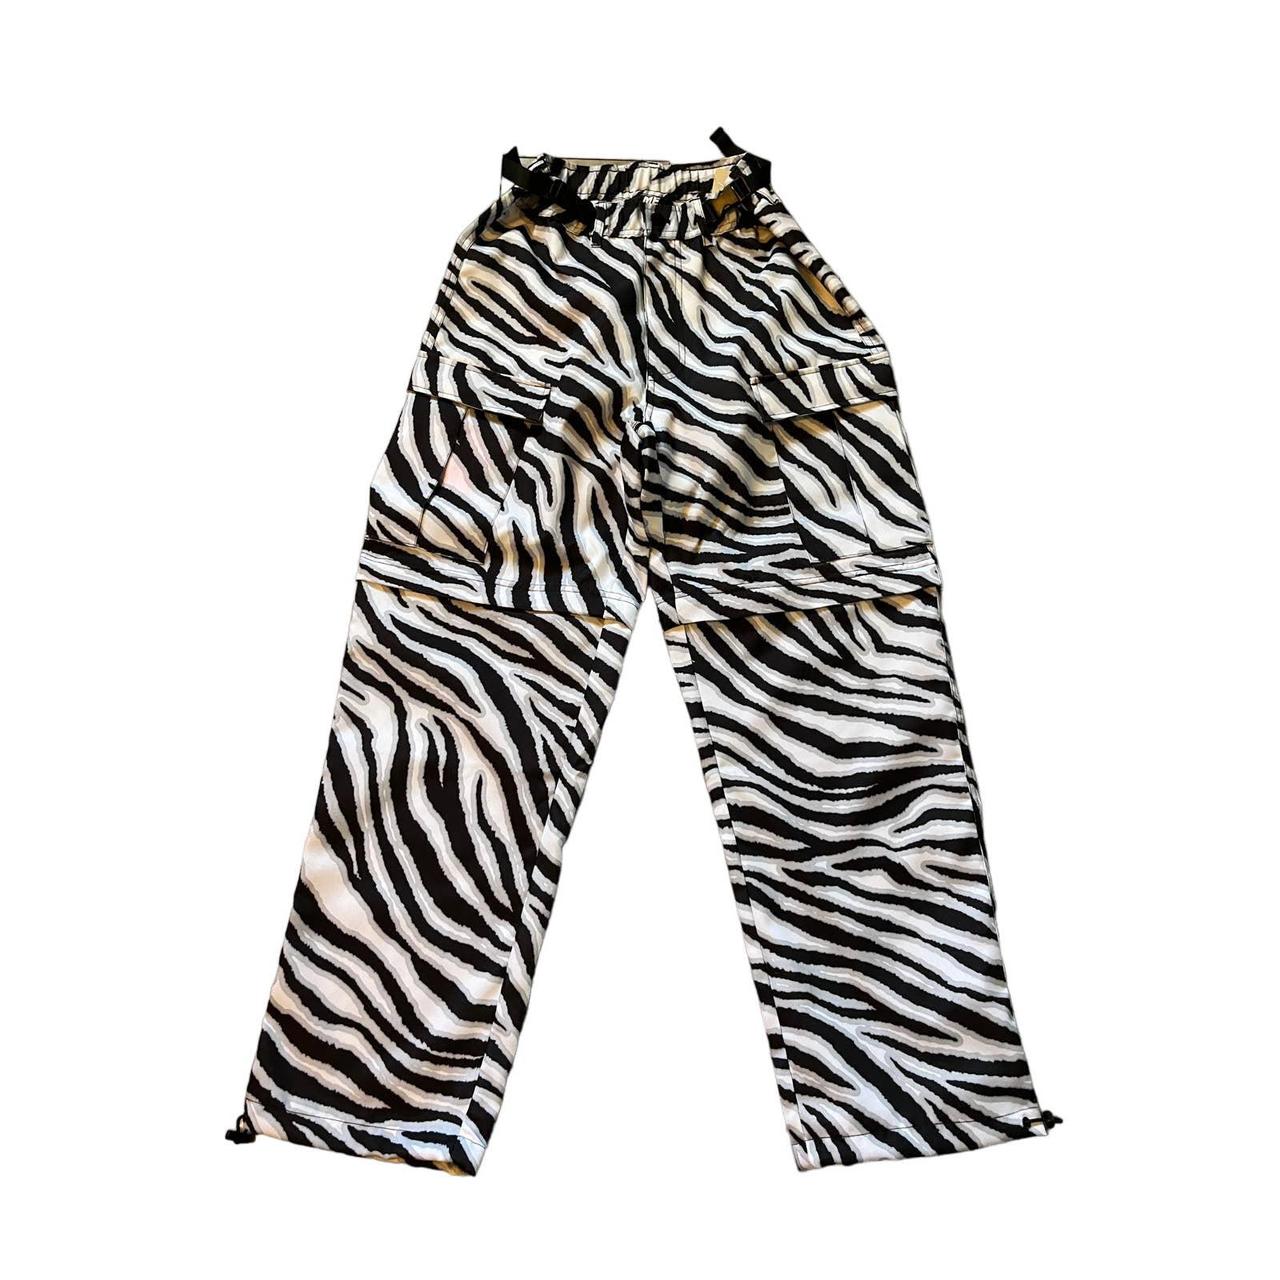 The Zia Trousers in Zebra Print